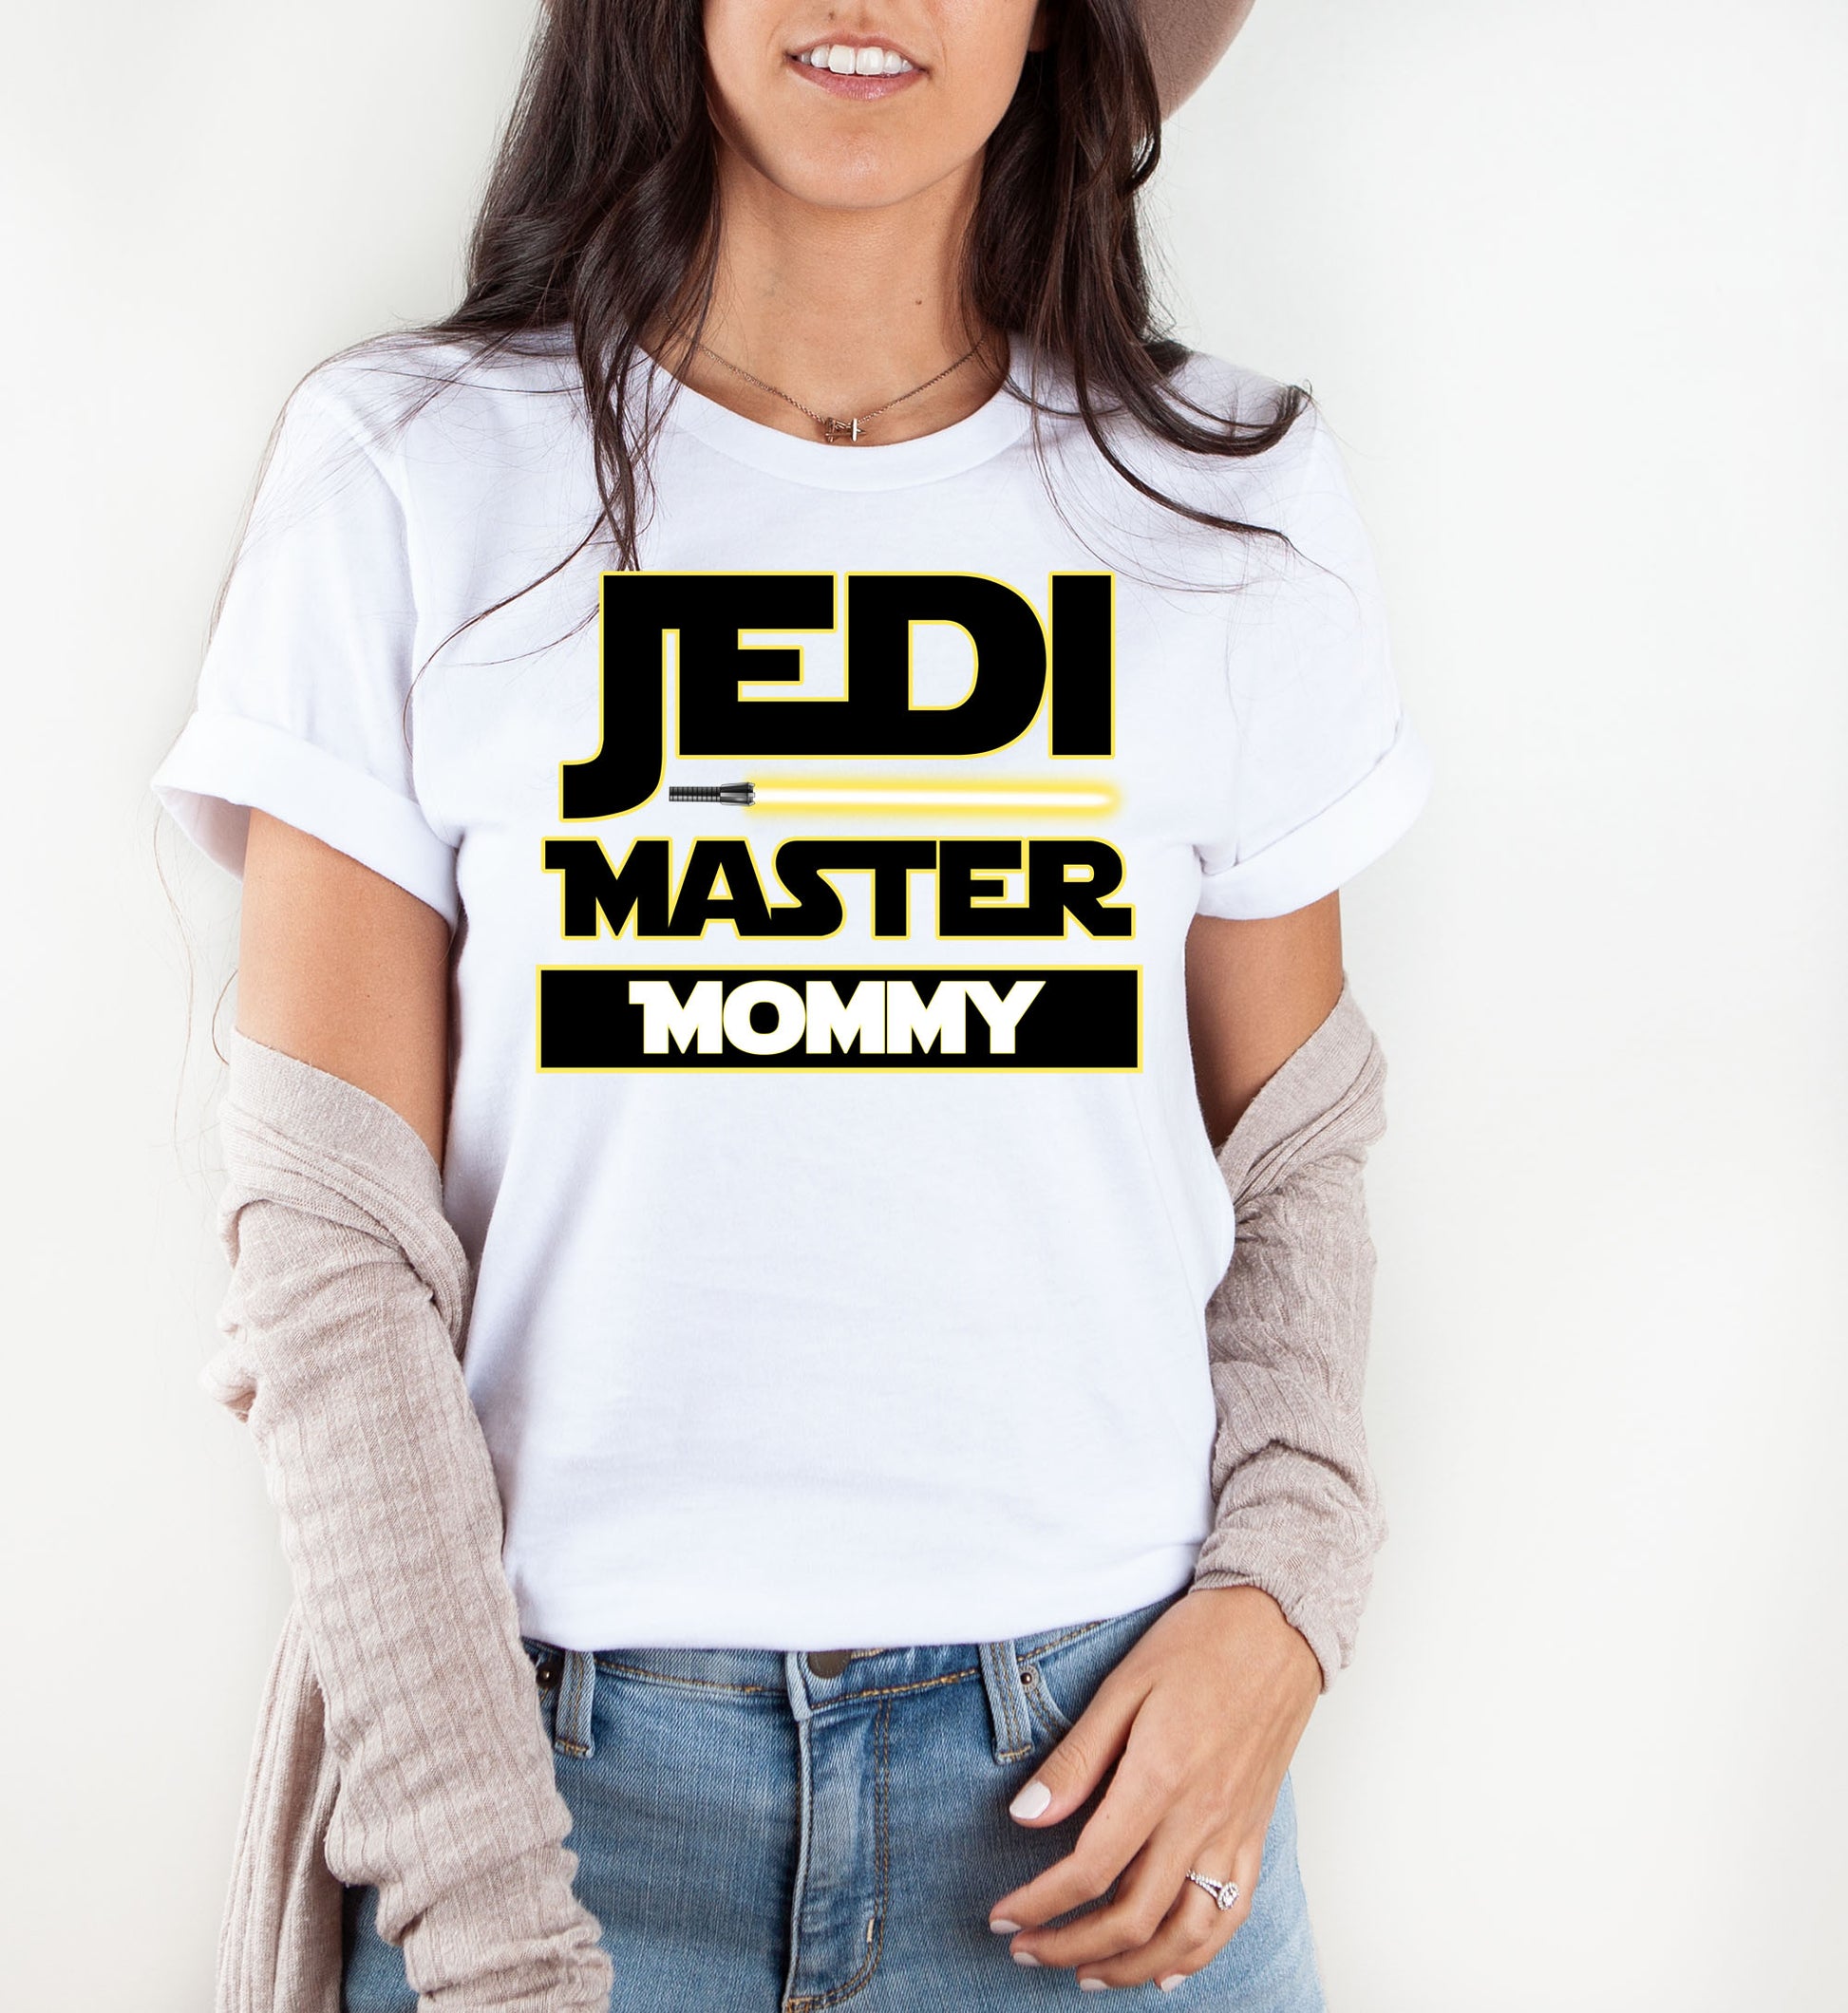 Star Wars Jedi Master Mom Shirt